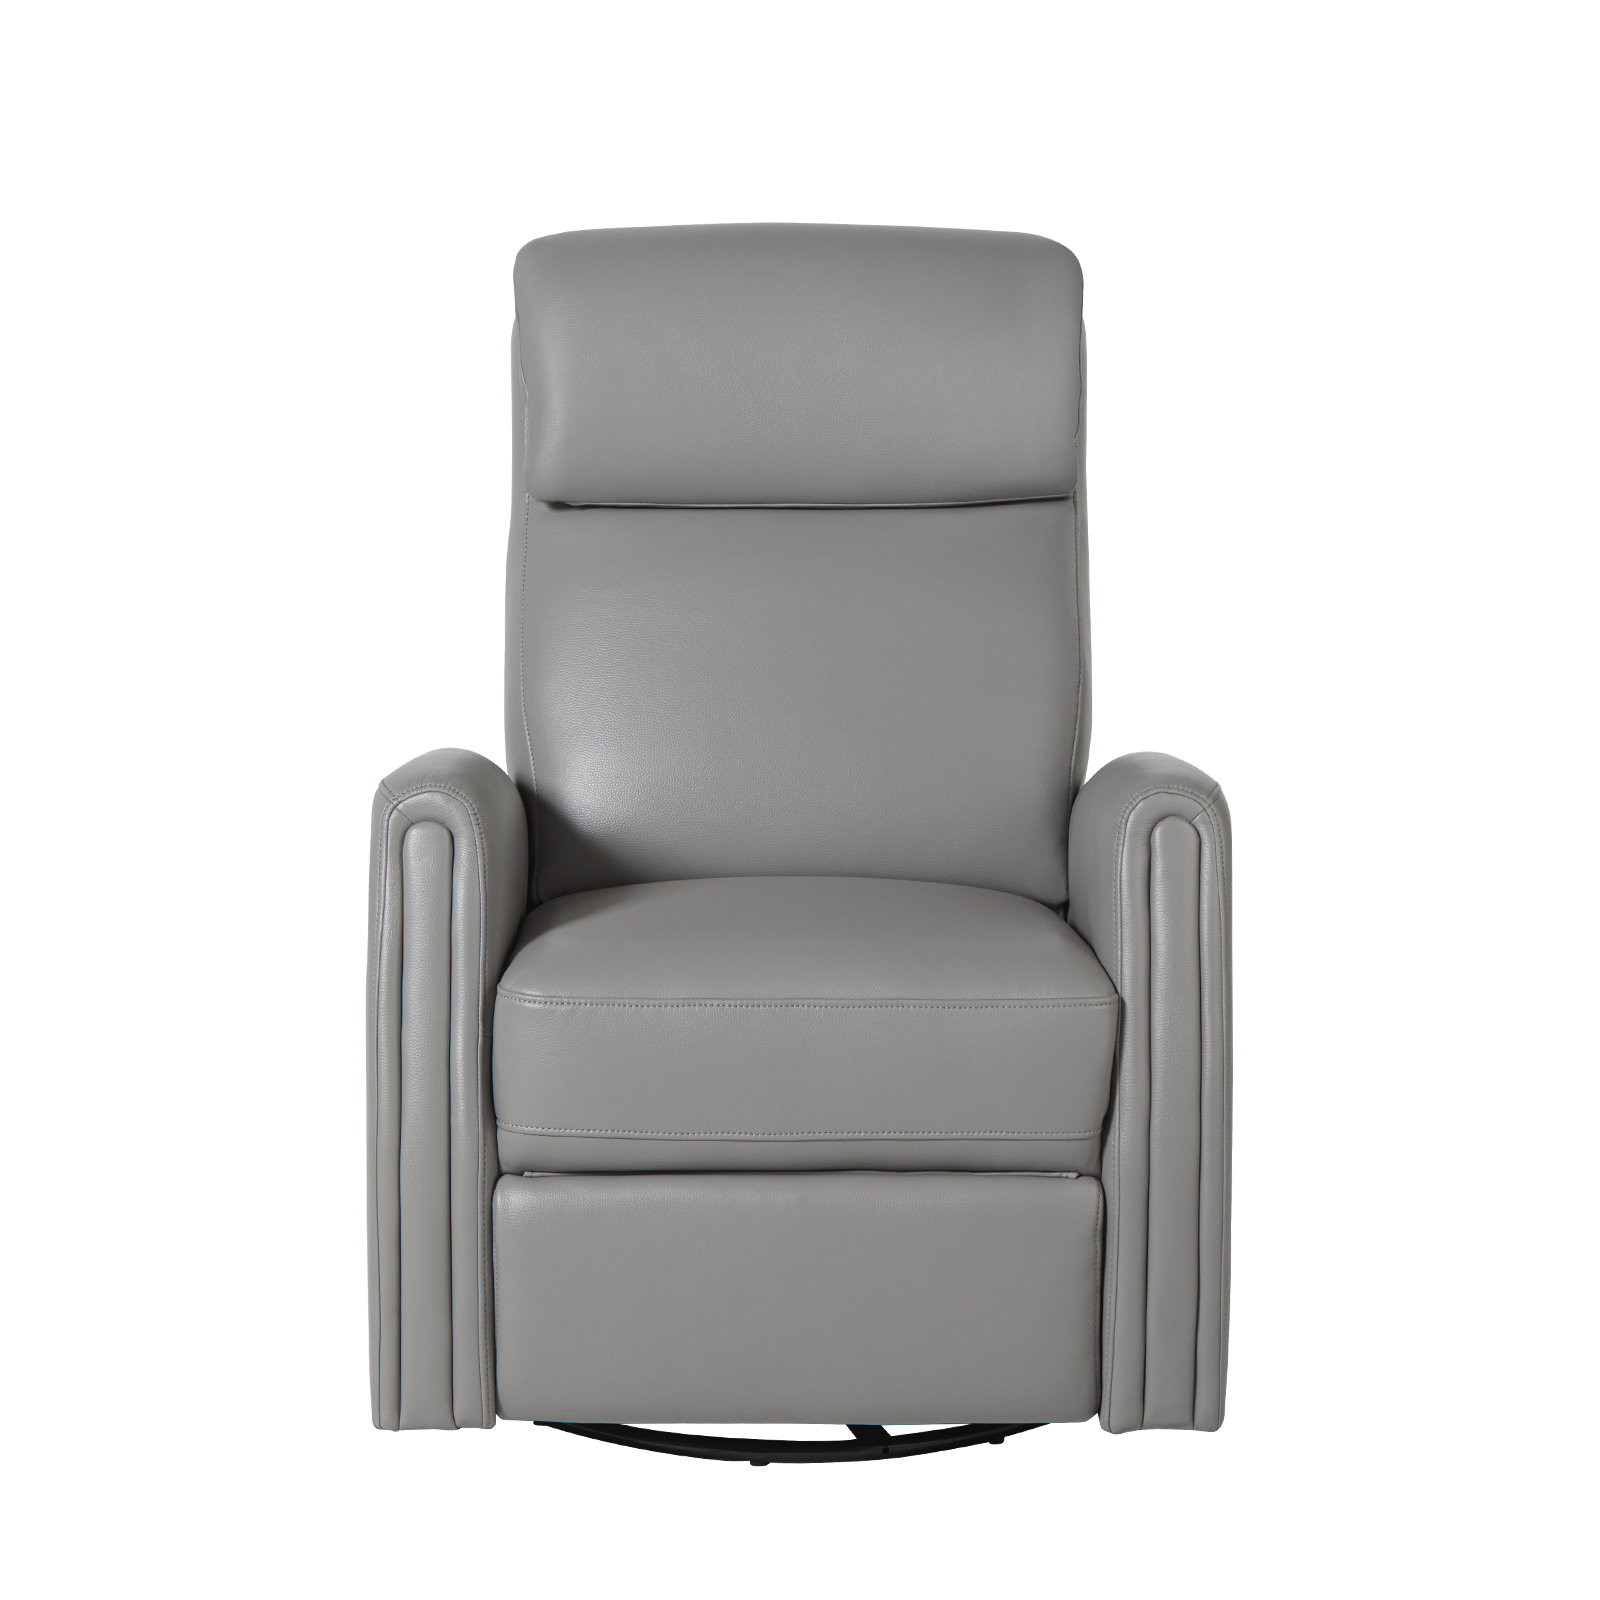 Ebern Designs Vegan Leather Manual Swivel Rocker Glider Recliner Chair with  Massage & Heat, Lumbar Pillow Included & Reviews